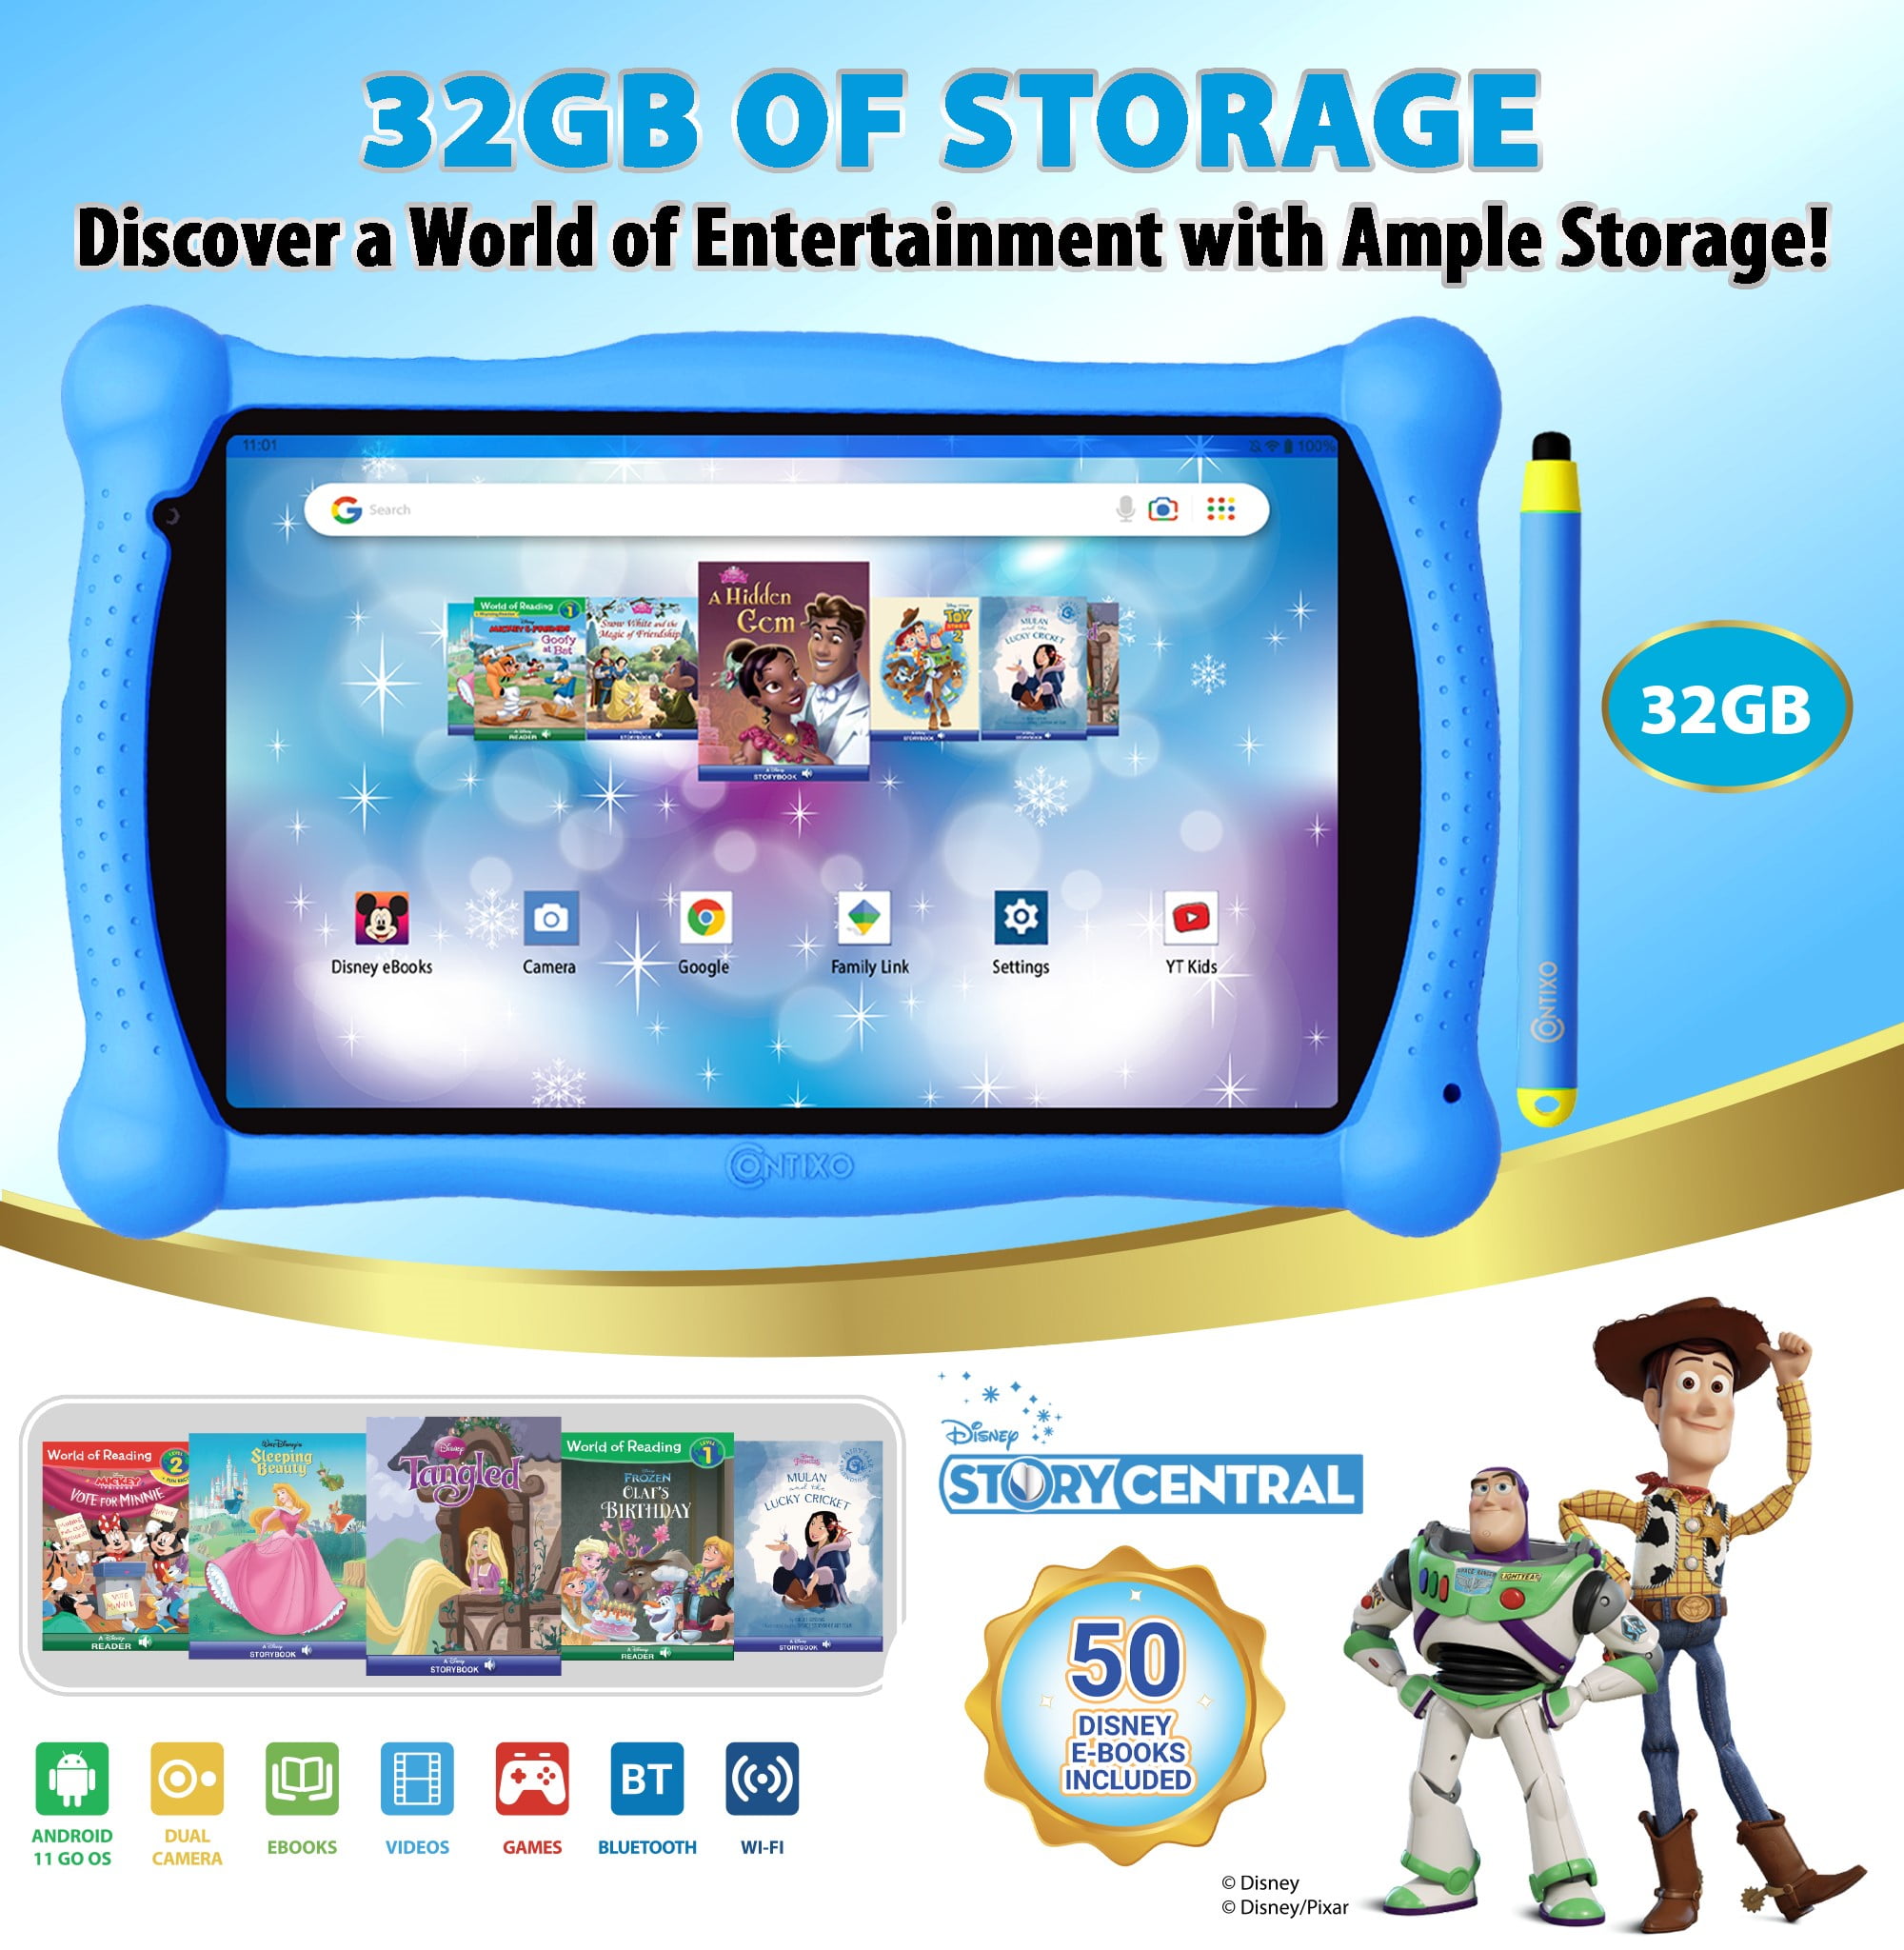 Luxury Touch KIds TAB E2 - Tablette éducative Enfant 6GB / 128GB